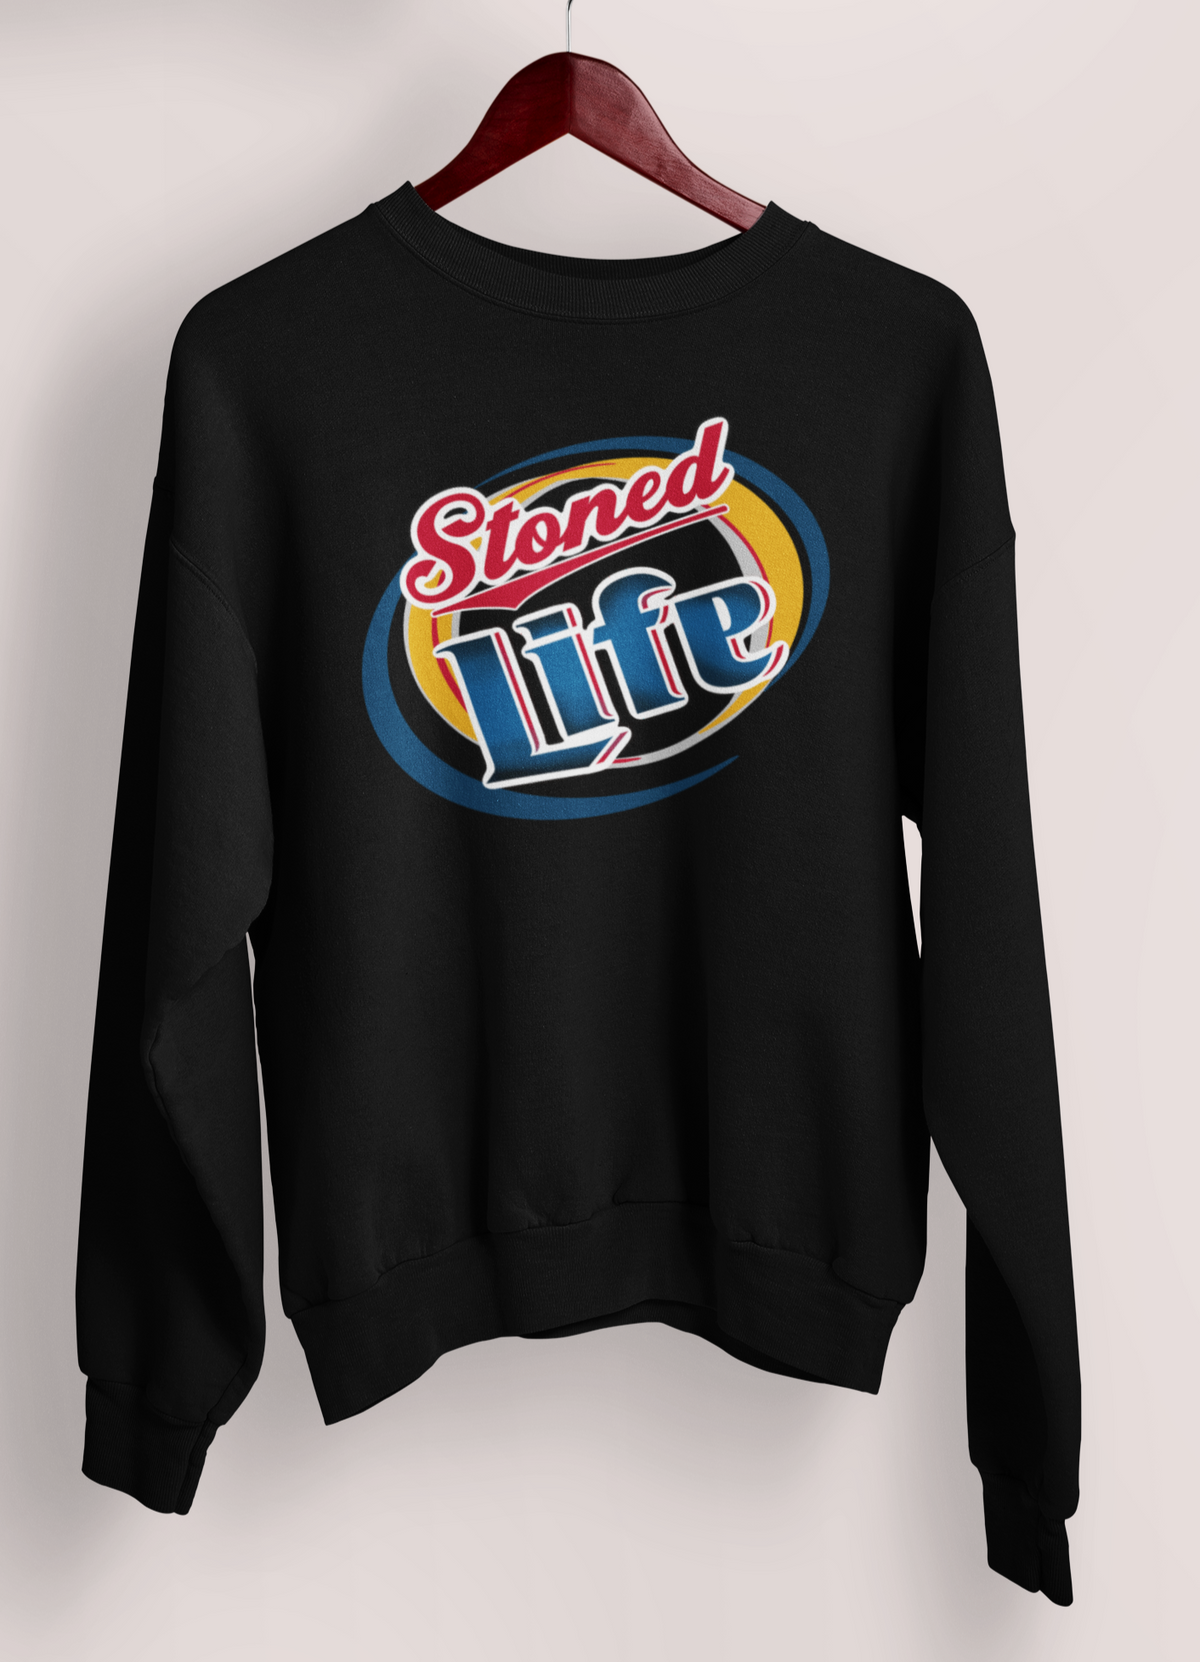 black sweatshirt saying stoned life - HighCiti